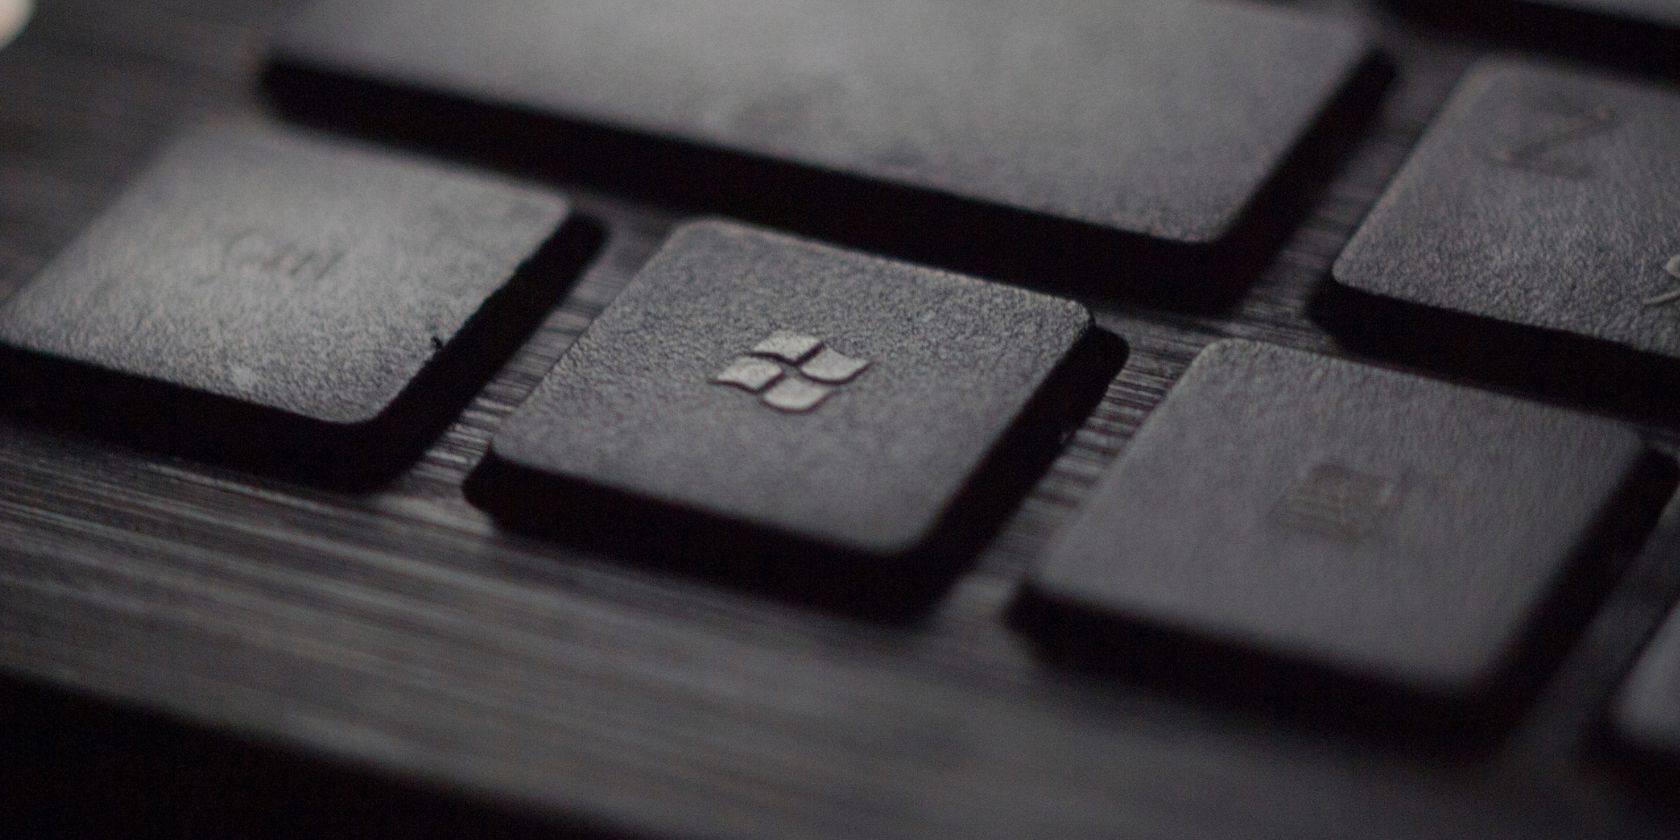 black keyboard key with windows logo engrained